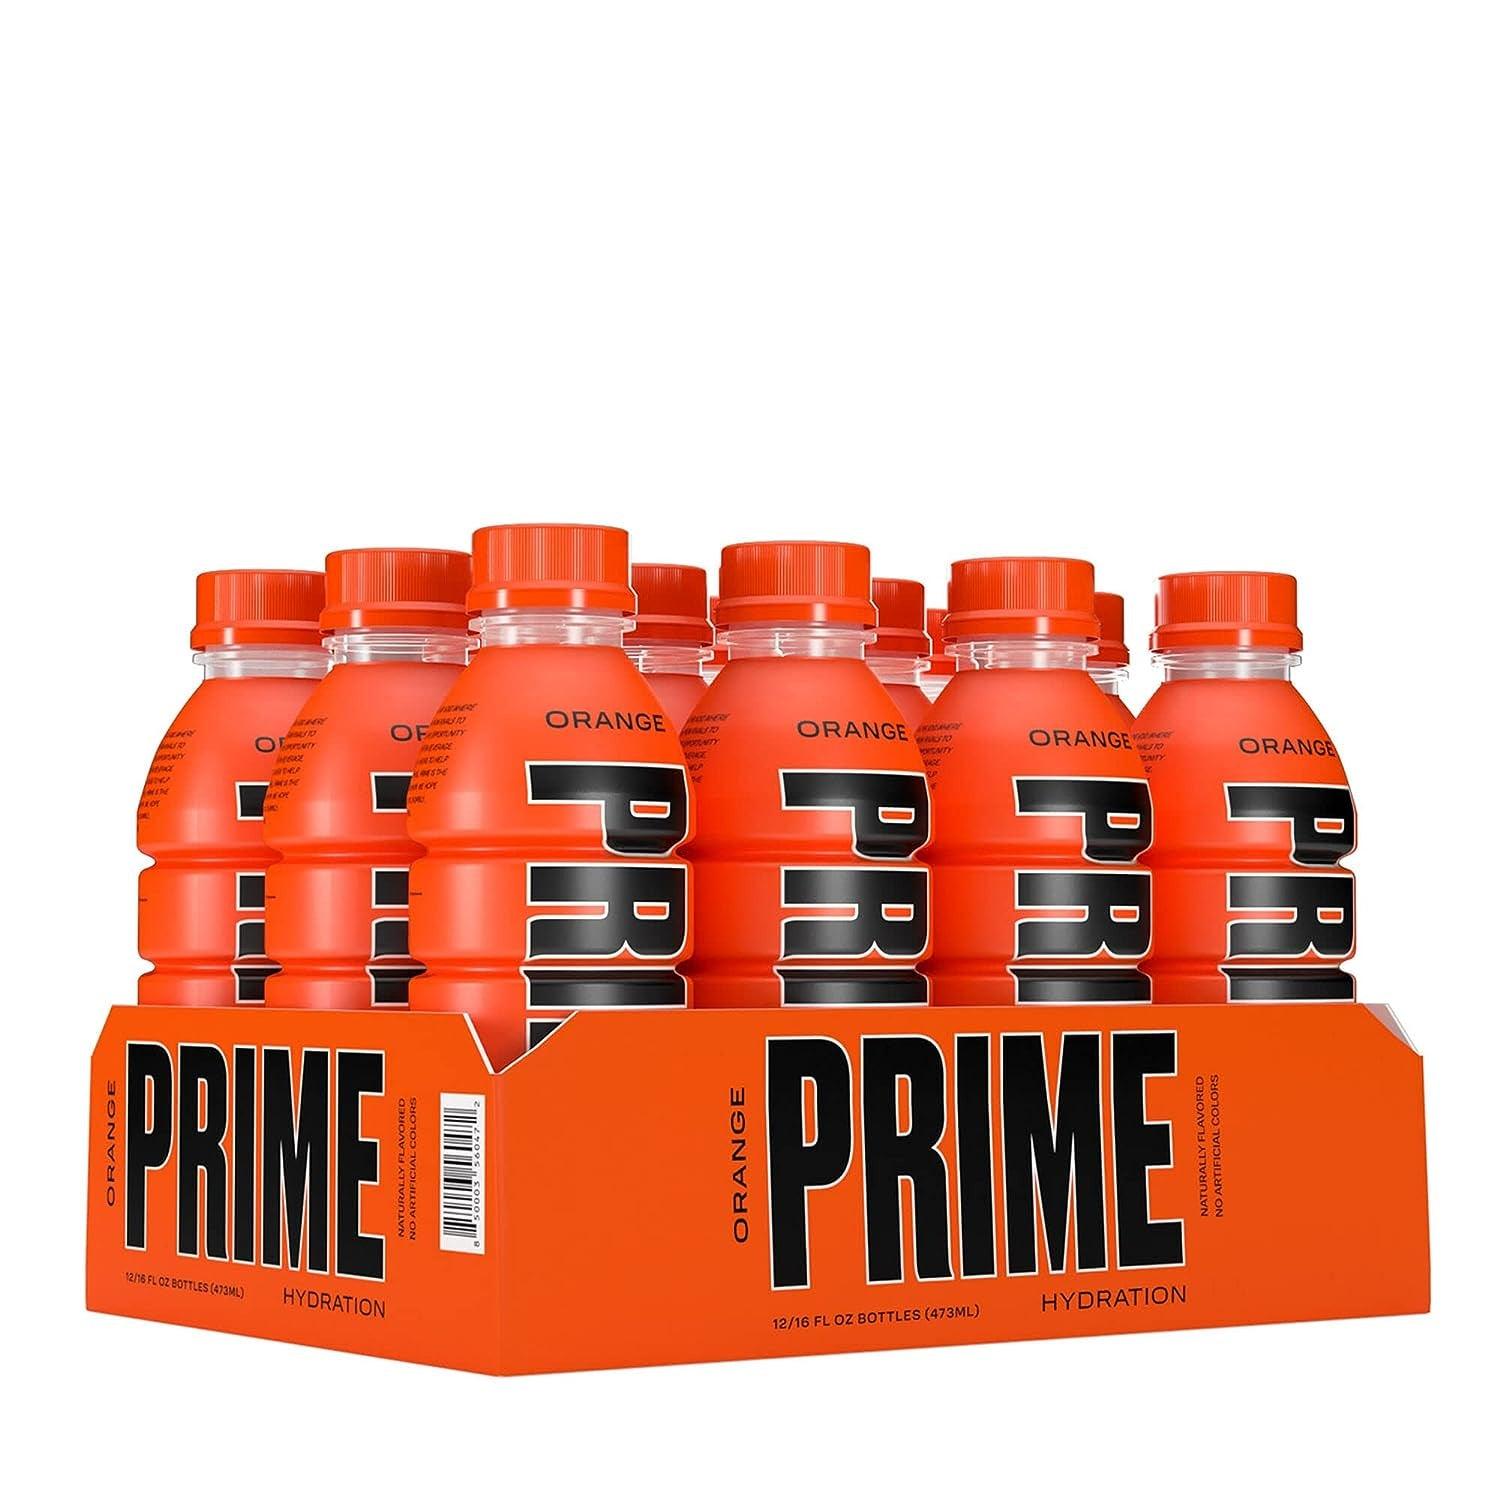 Prime Hydration Drink Orange -500ml - Case of 12 - Greens Essentials